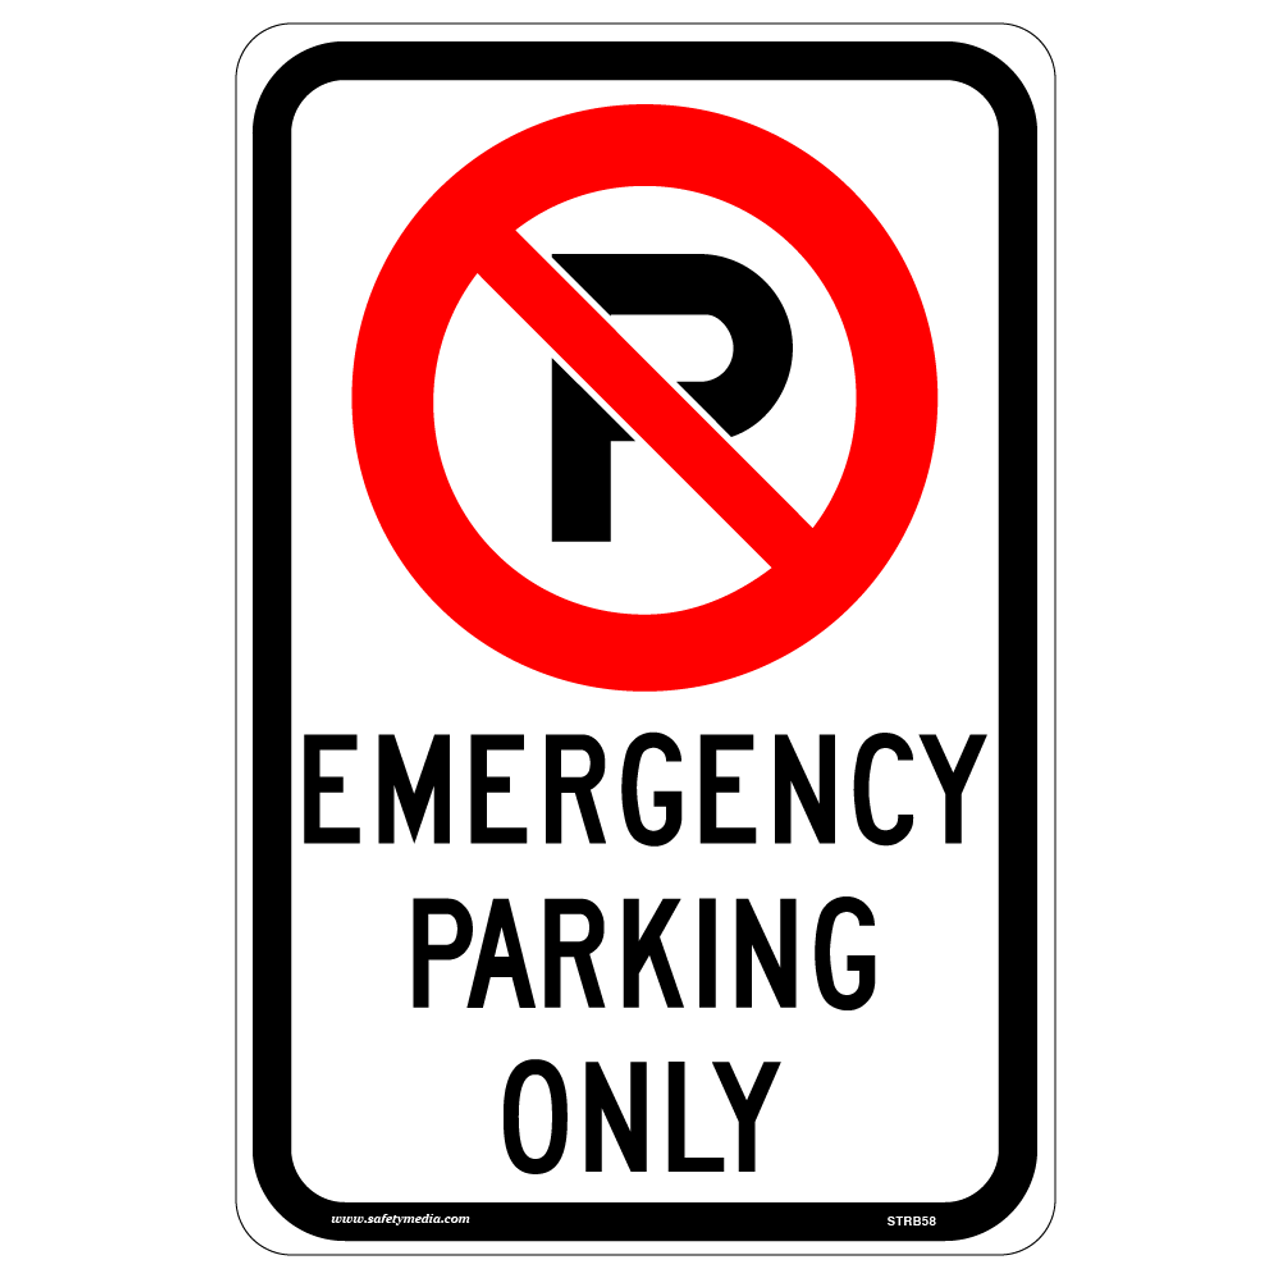 Regulatory No Parking, Emergency Parking Only Sign RB-58